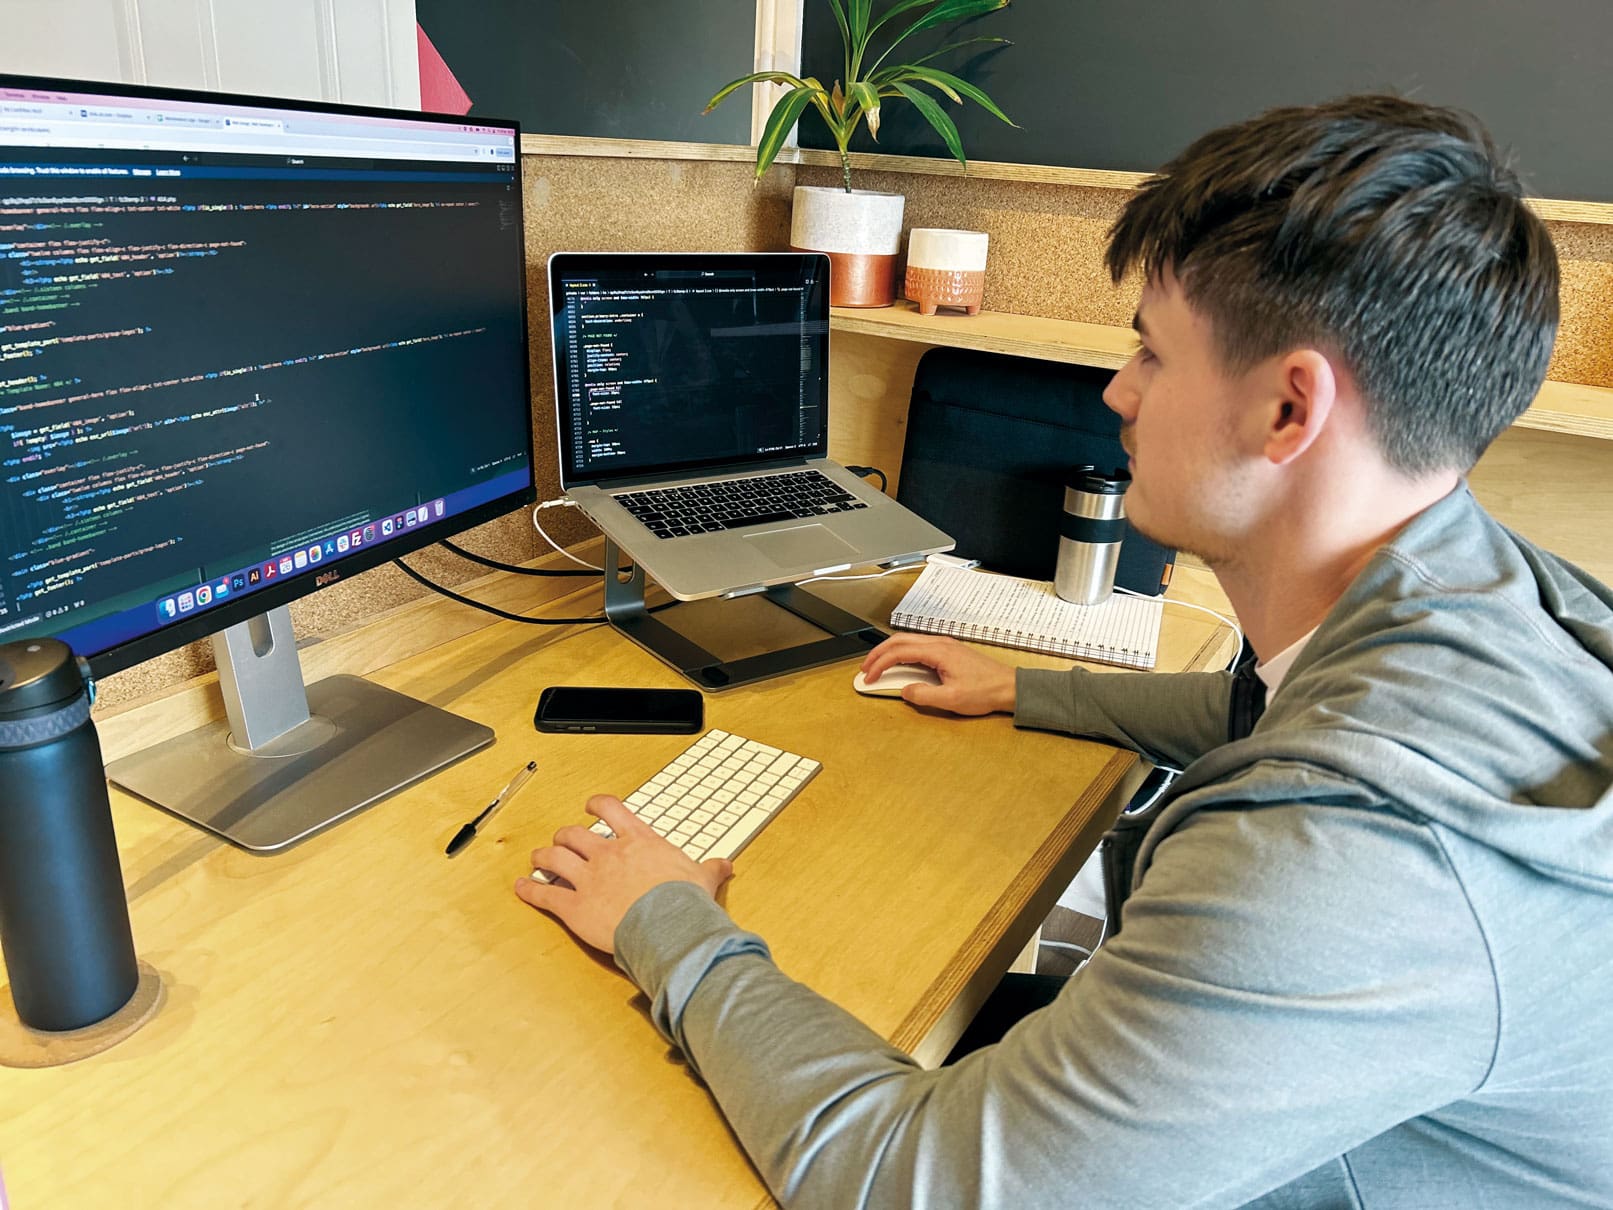 Future Web Design - Developer working in office